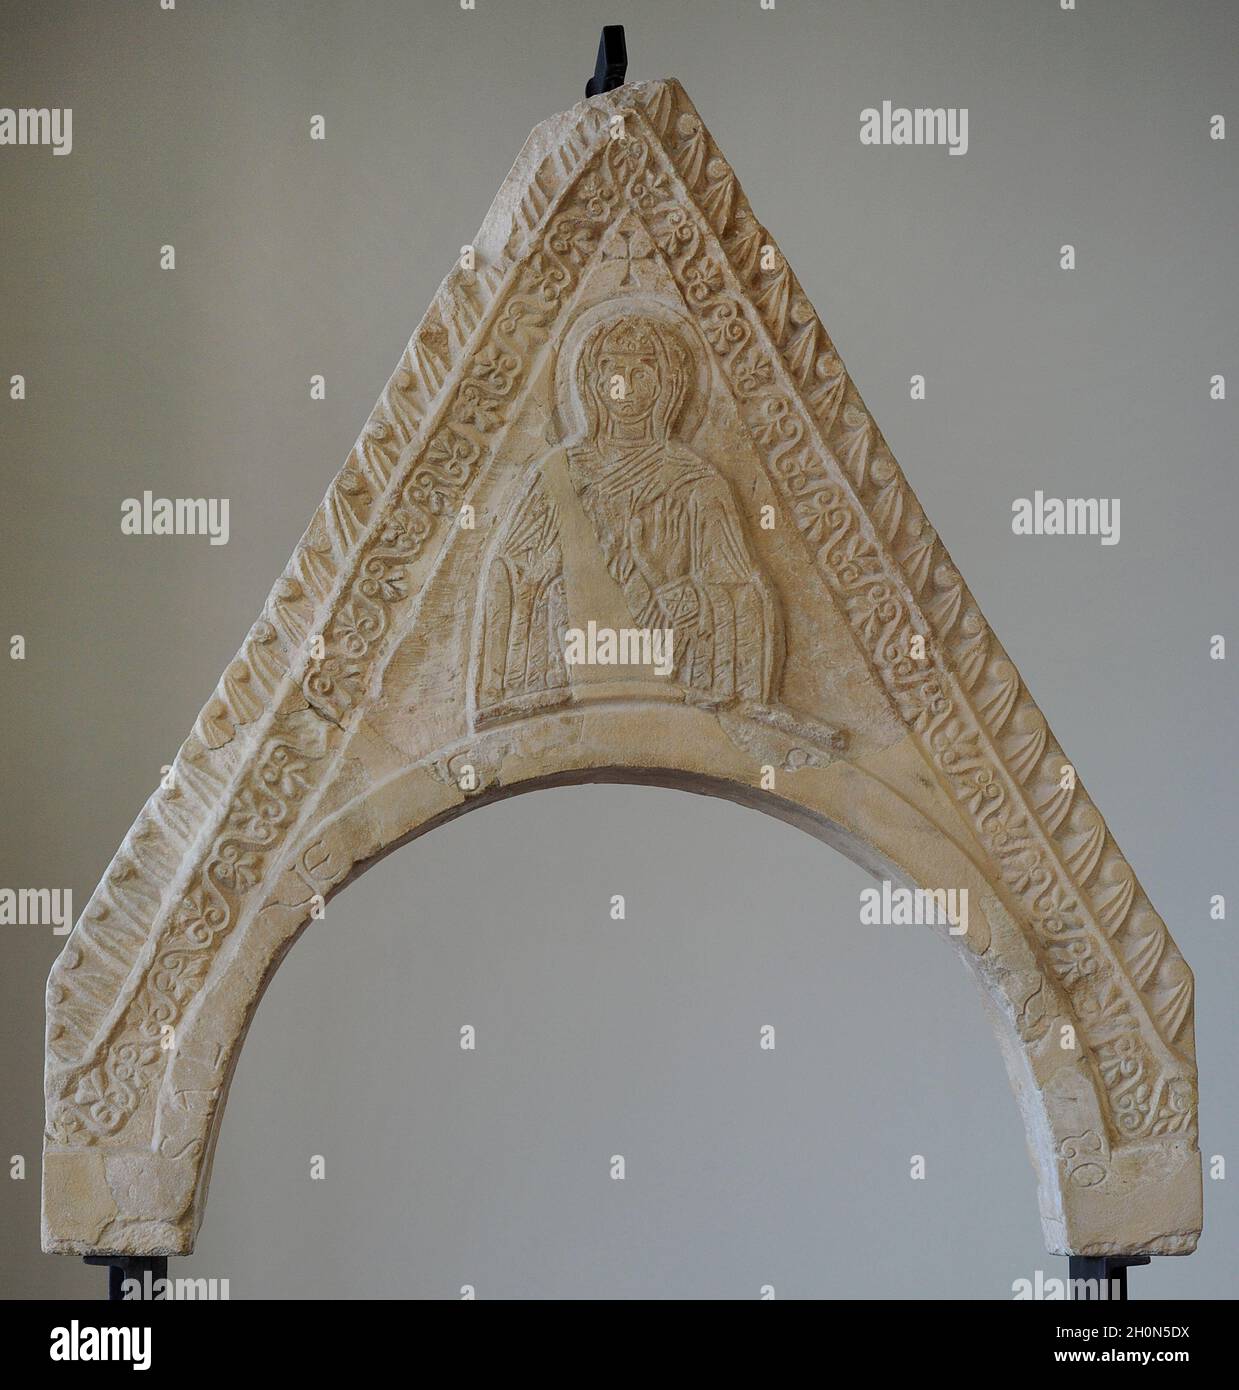 Pediment with figure of the Madonna. From Biskupija, near Knin. Croatia. 11th century. Museum of Croatian Archaeological Monuments, Split, Croatia. Stock Photo